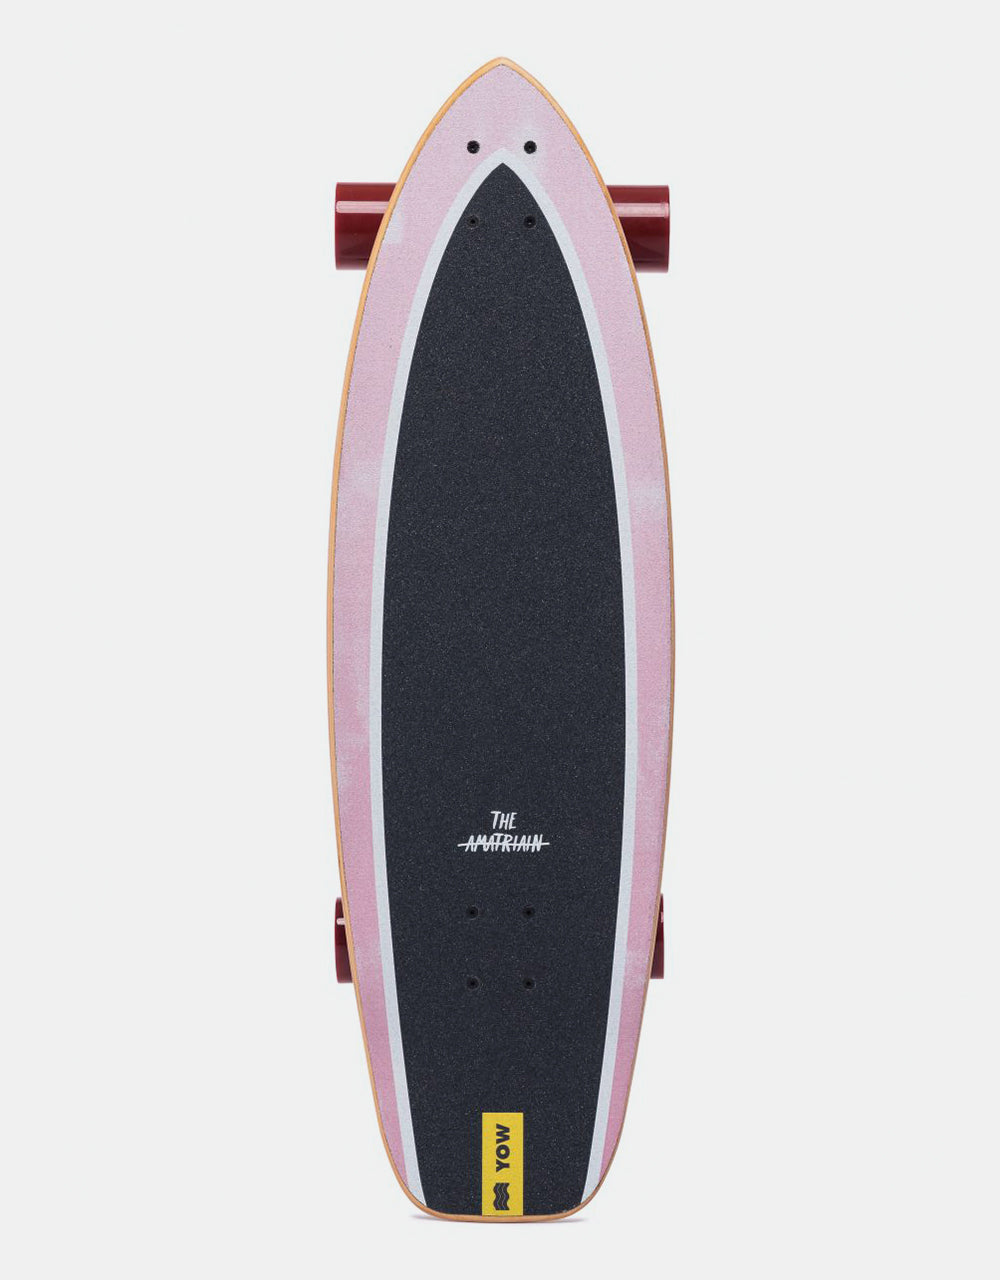 YOW Amatriain SurfSkate Cruiser Skateboard - 10" x 33.5"